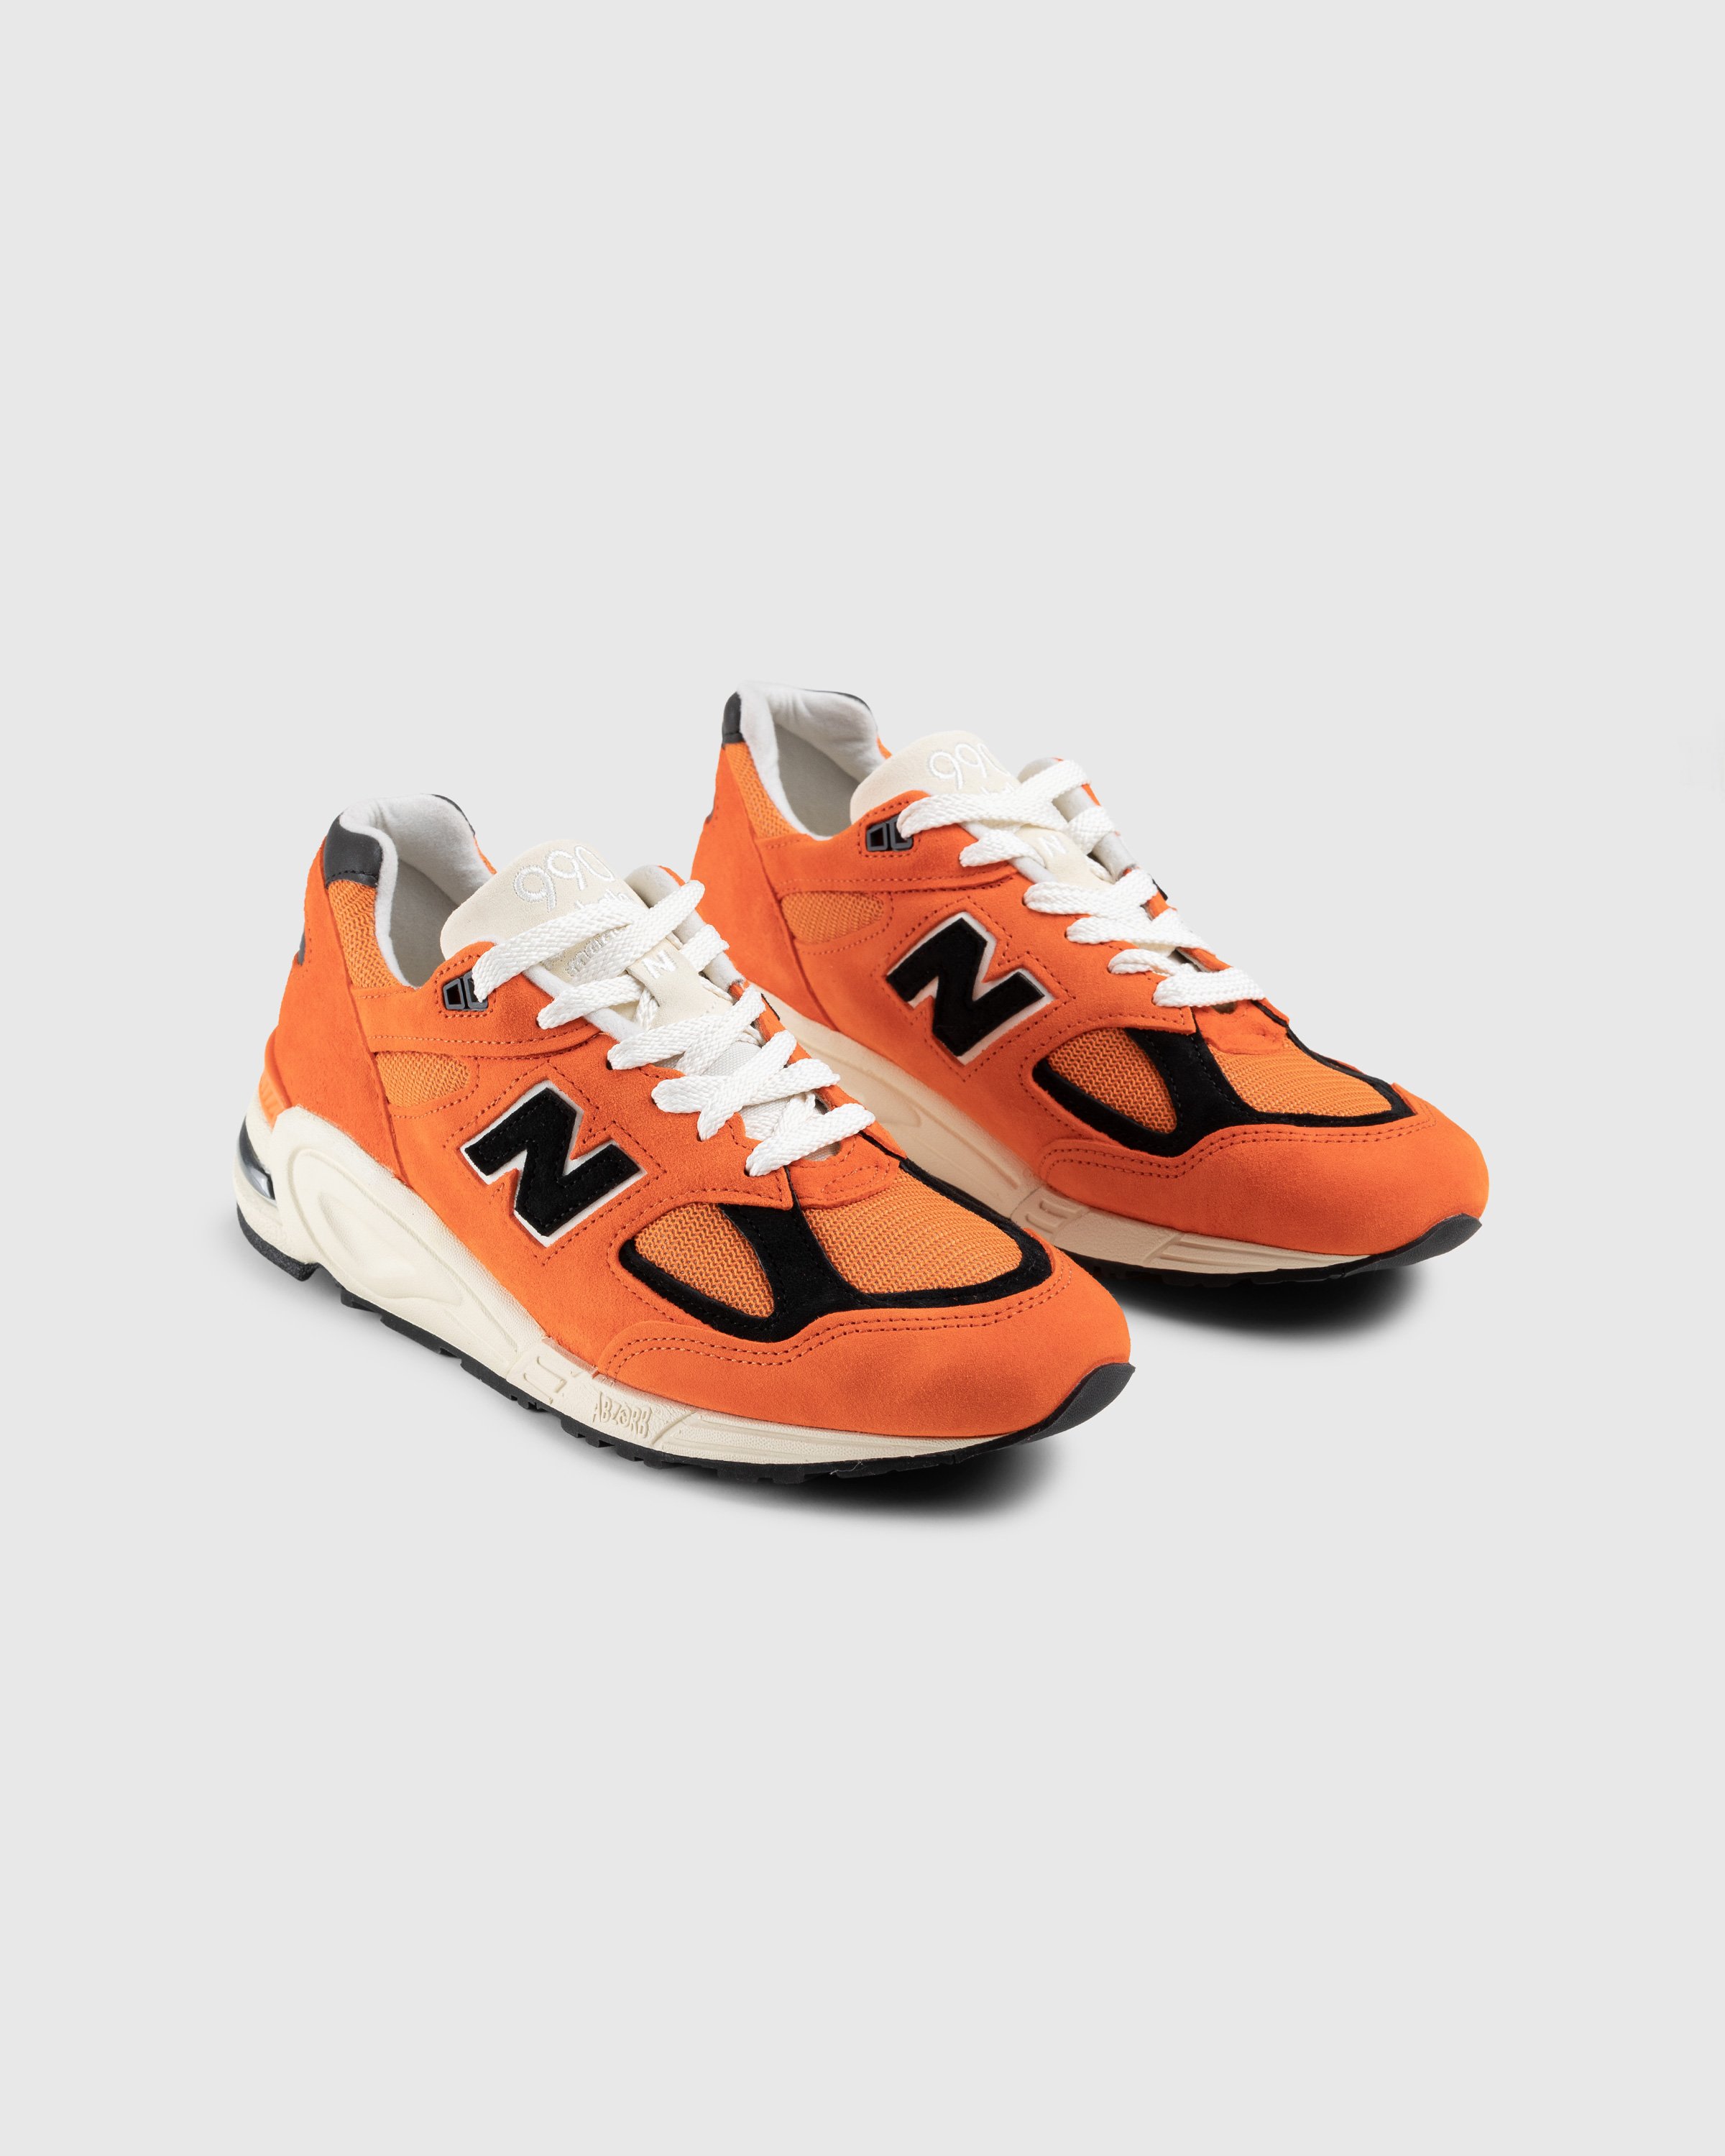 New Balance - M990AI2 Orange - Footwear - Orange - Image 3